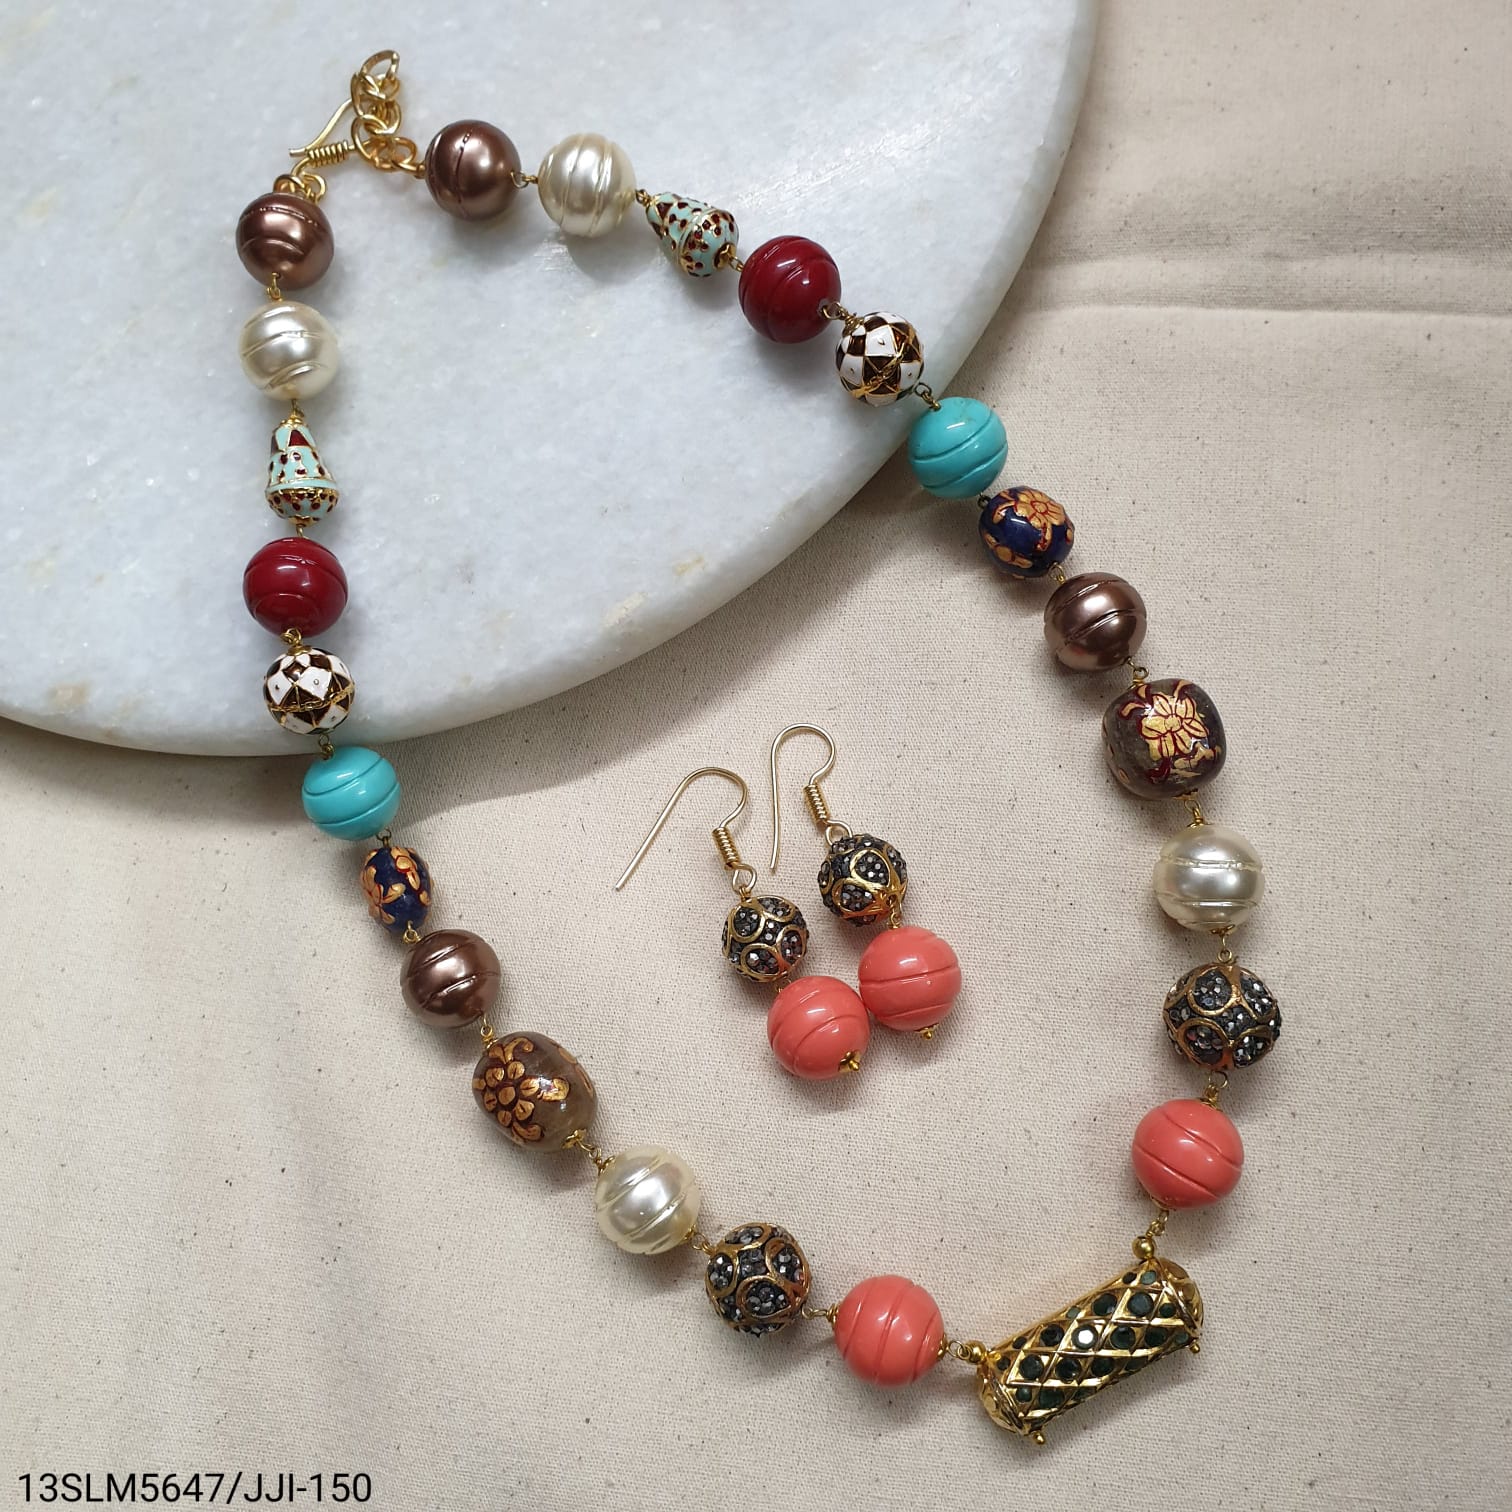 Multi Fancy Beads Necklace With Earrings